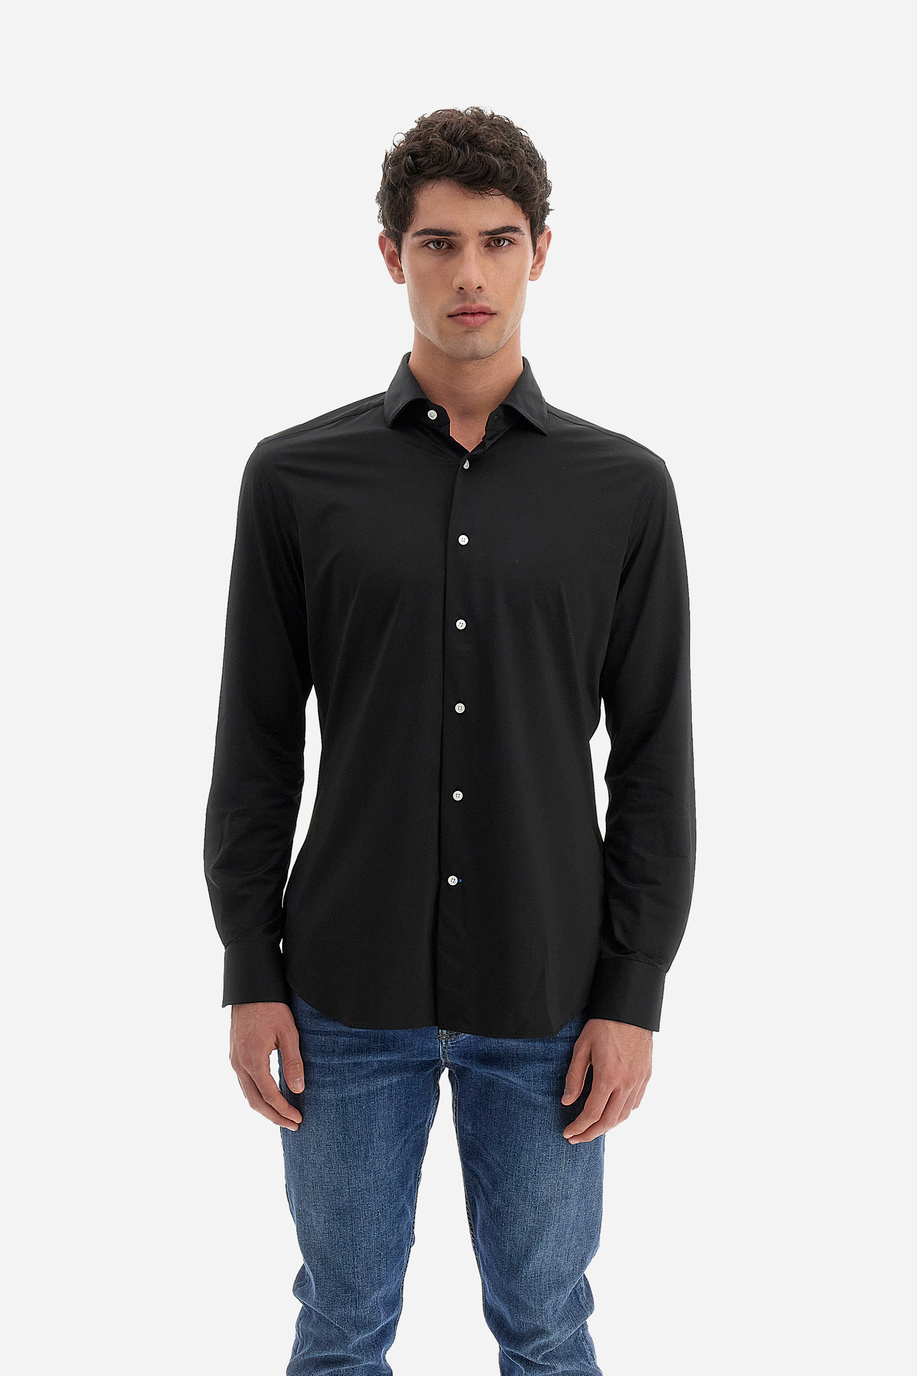 Men’s Blue Ribbon Shirt in Cotton Jersey Regular Fit Long Sleeves - Premium Fabrics | La Martina - Official Online Shop